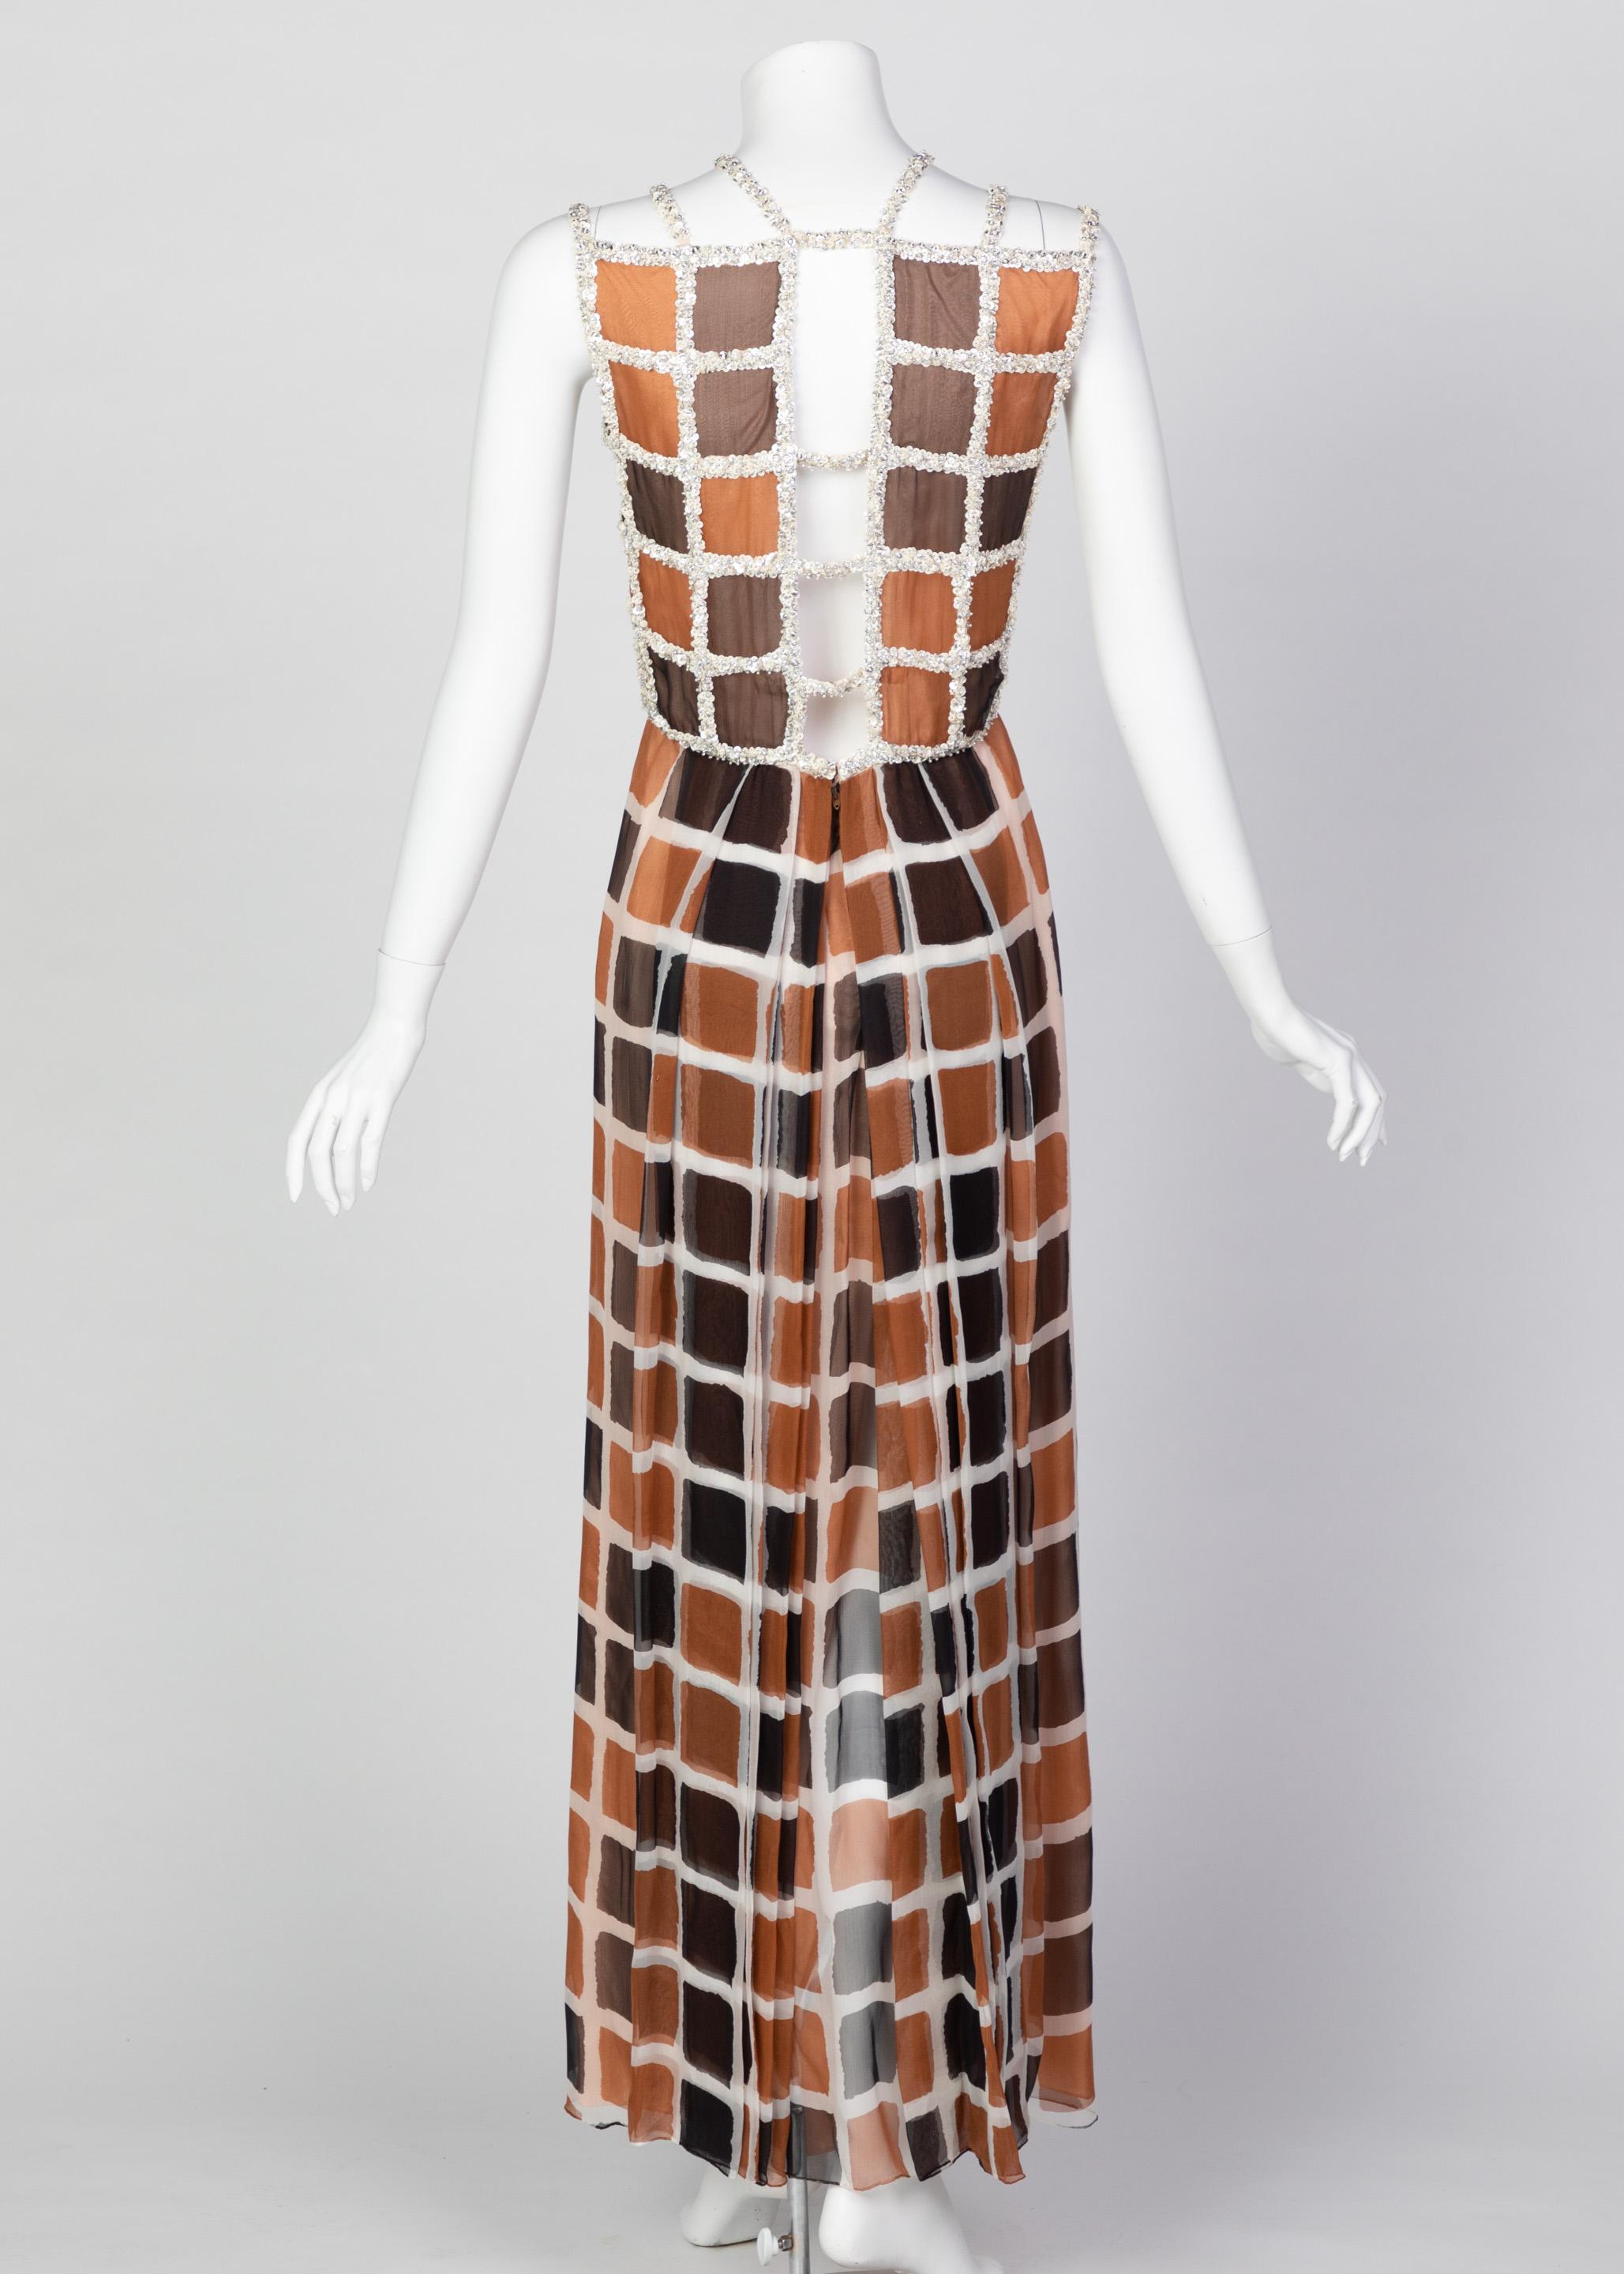 James Galanos Couture Chiffon Dress with Sequins Lattice Straps, 1980s 1